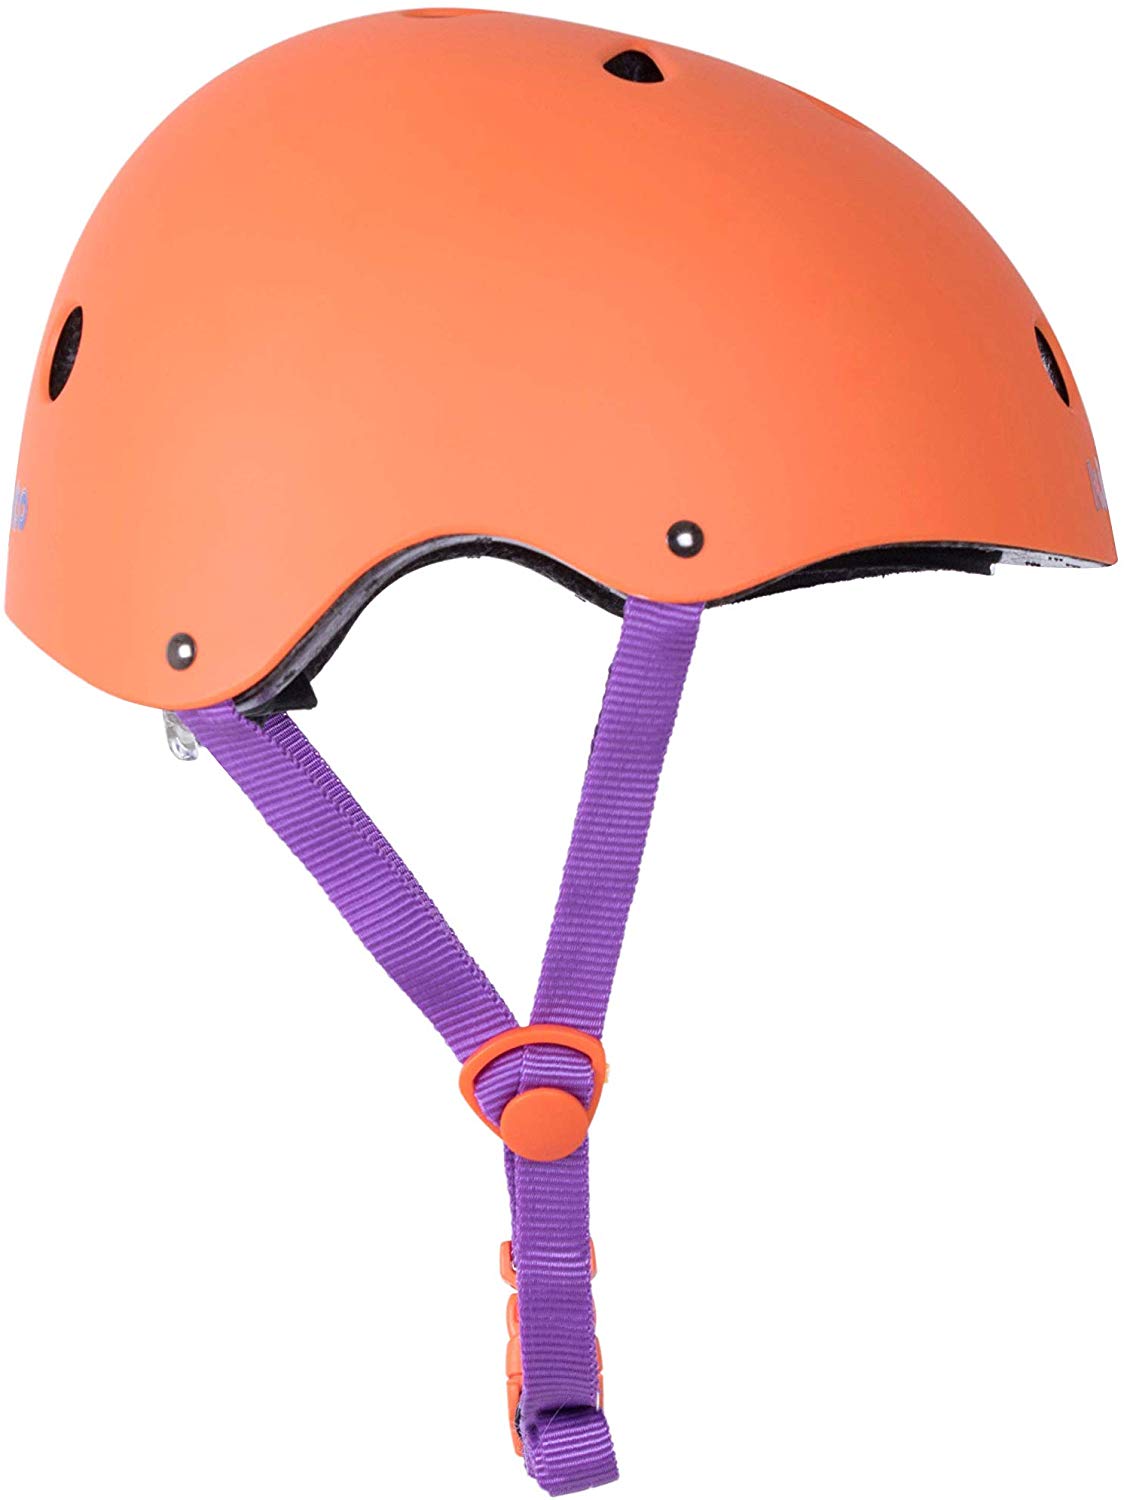 Kiddimoto Helmet, Matte Orange, Medium (53-58 cm) - Walmart.com